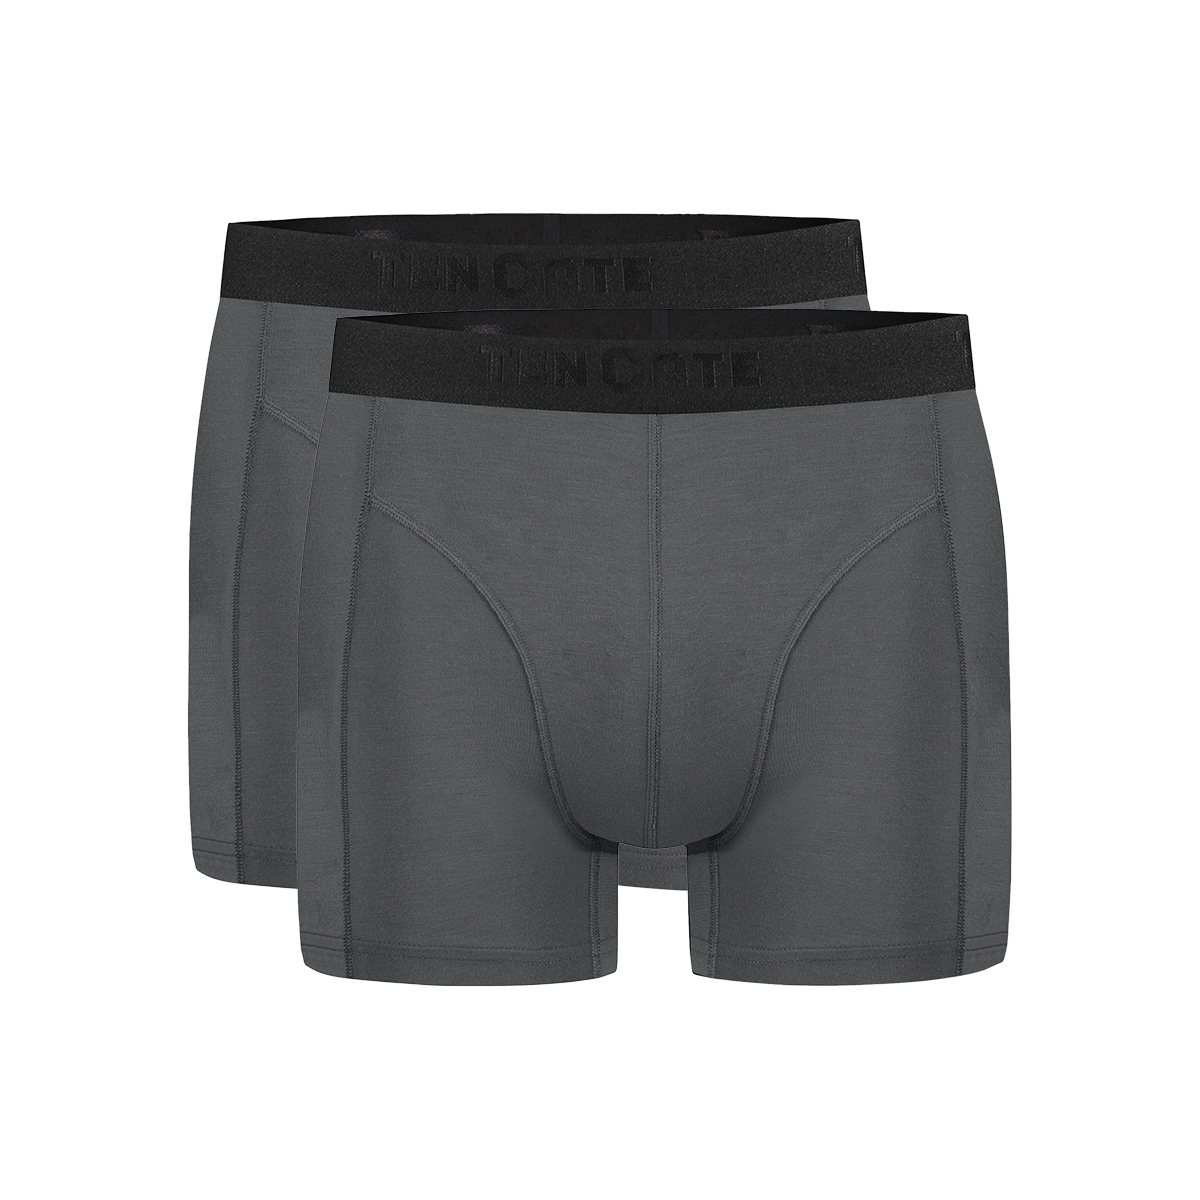 shorts grijs 2 pack